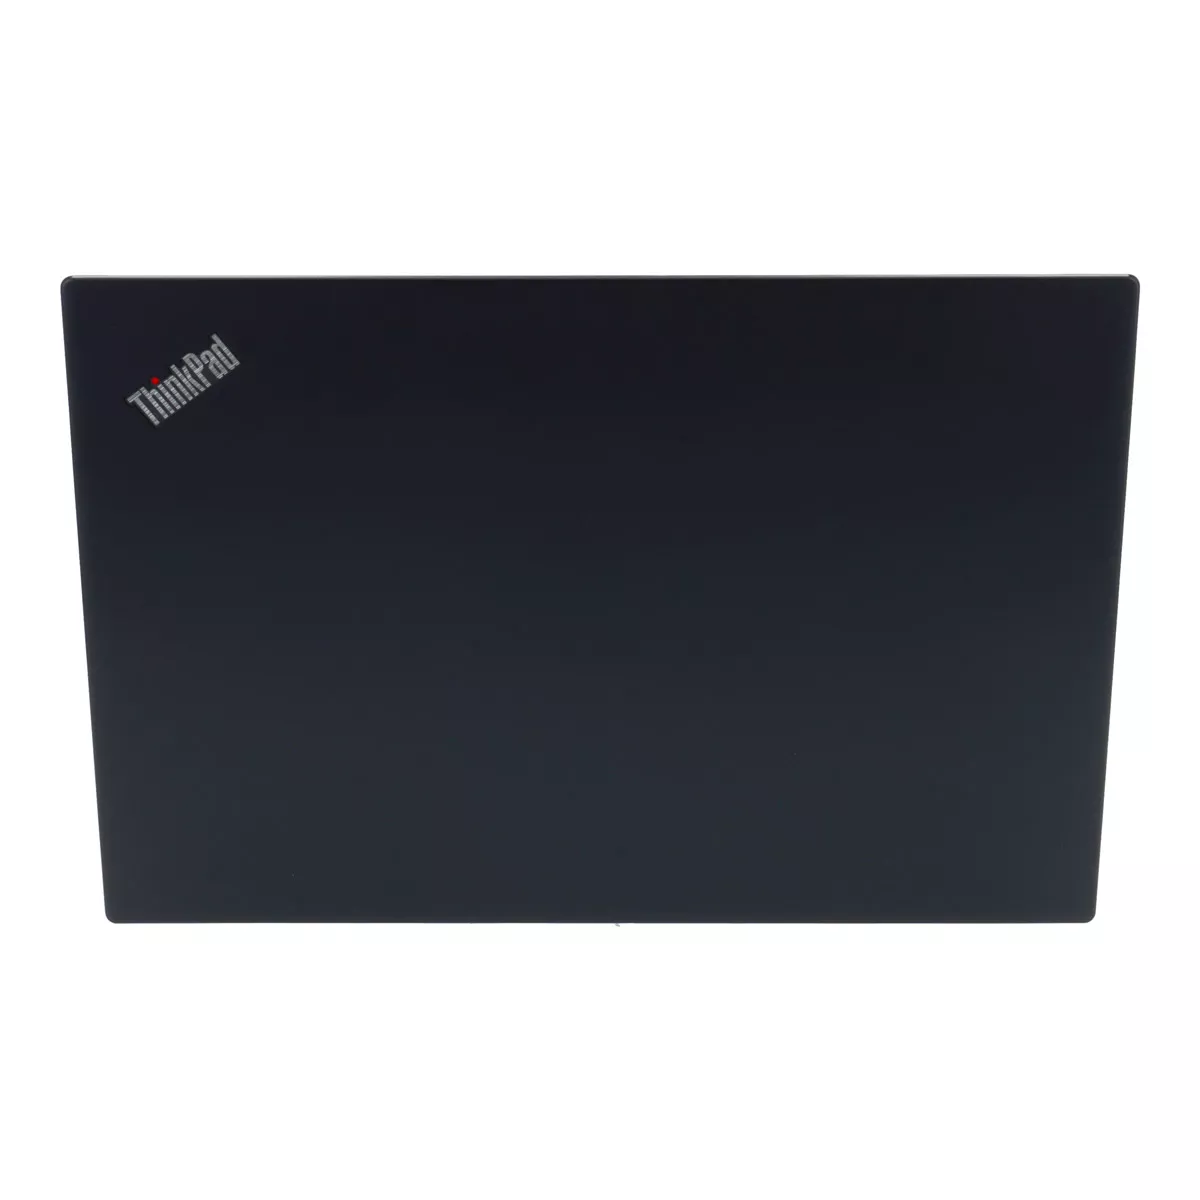 Lenovo ThinkPad T480s Core i7 8550U Full-HD 16 GB 500 GB M.2 nVME SSD Webcam B